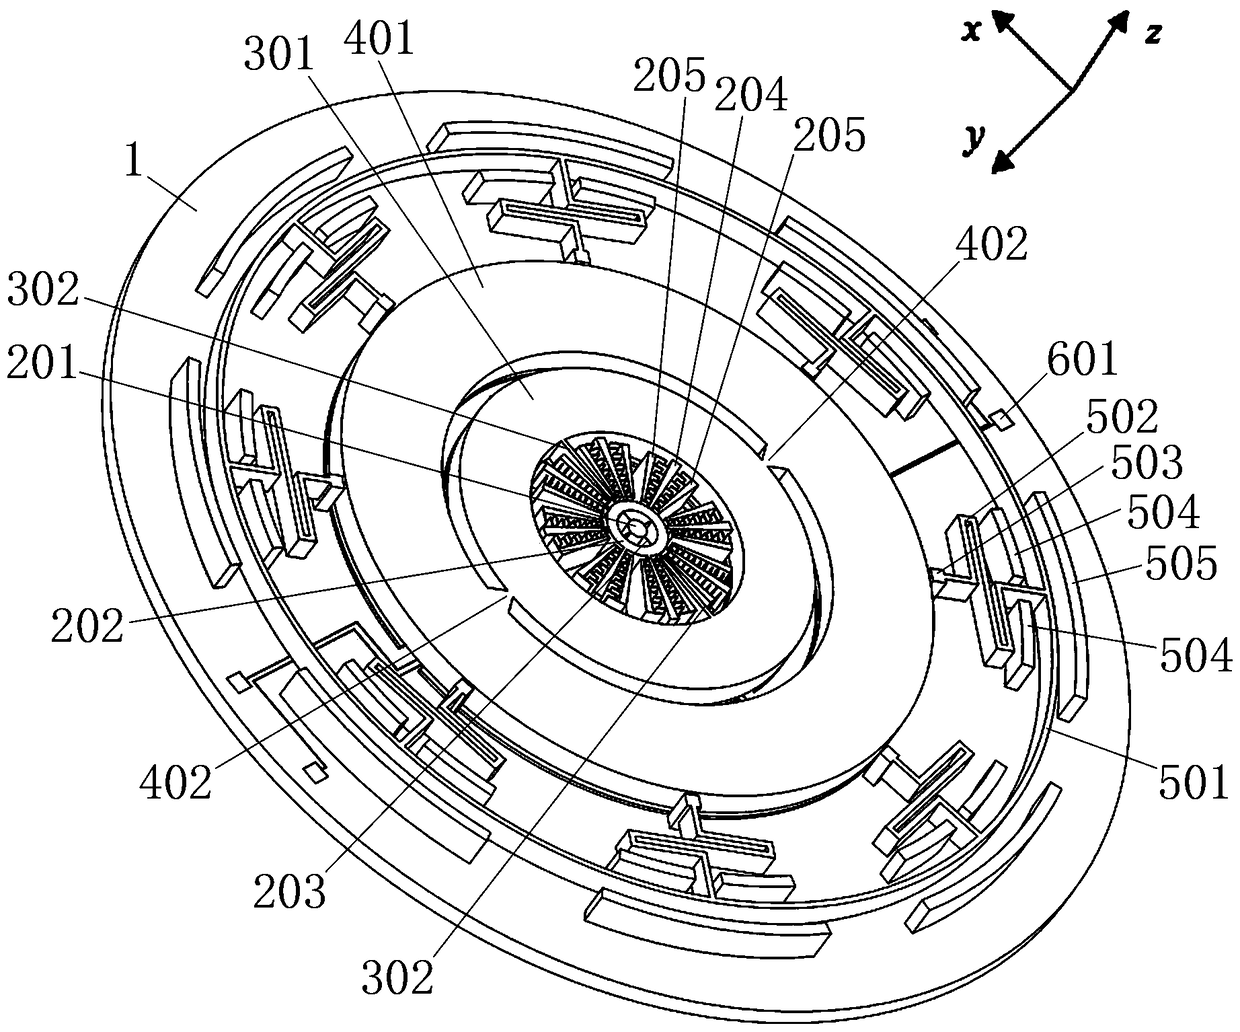 Singlechip three-axis MEMS gyroscope based on wheel-ring mode